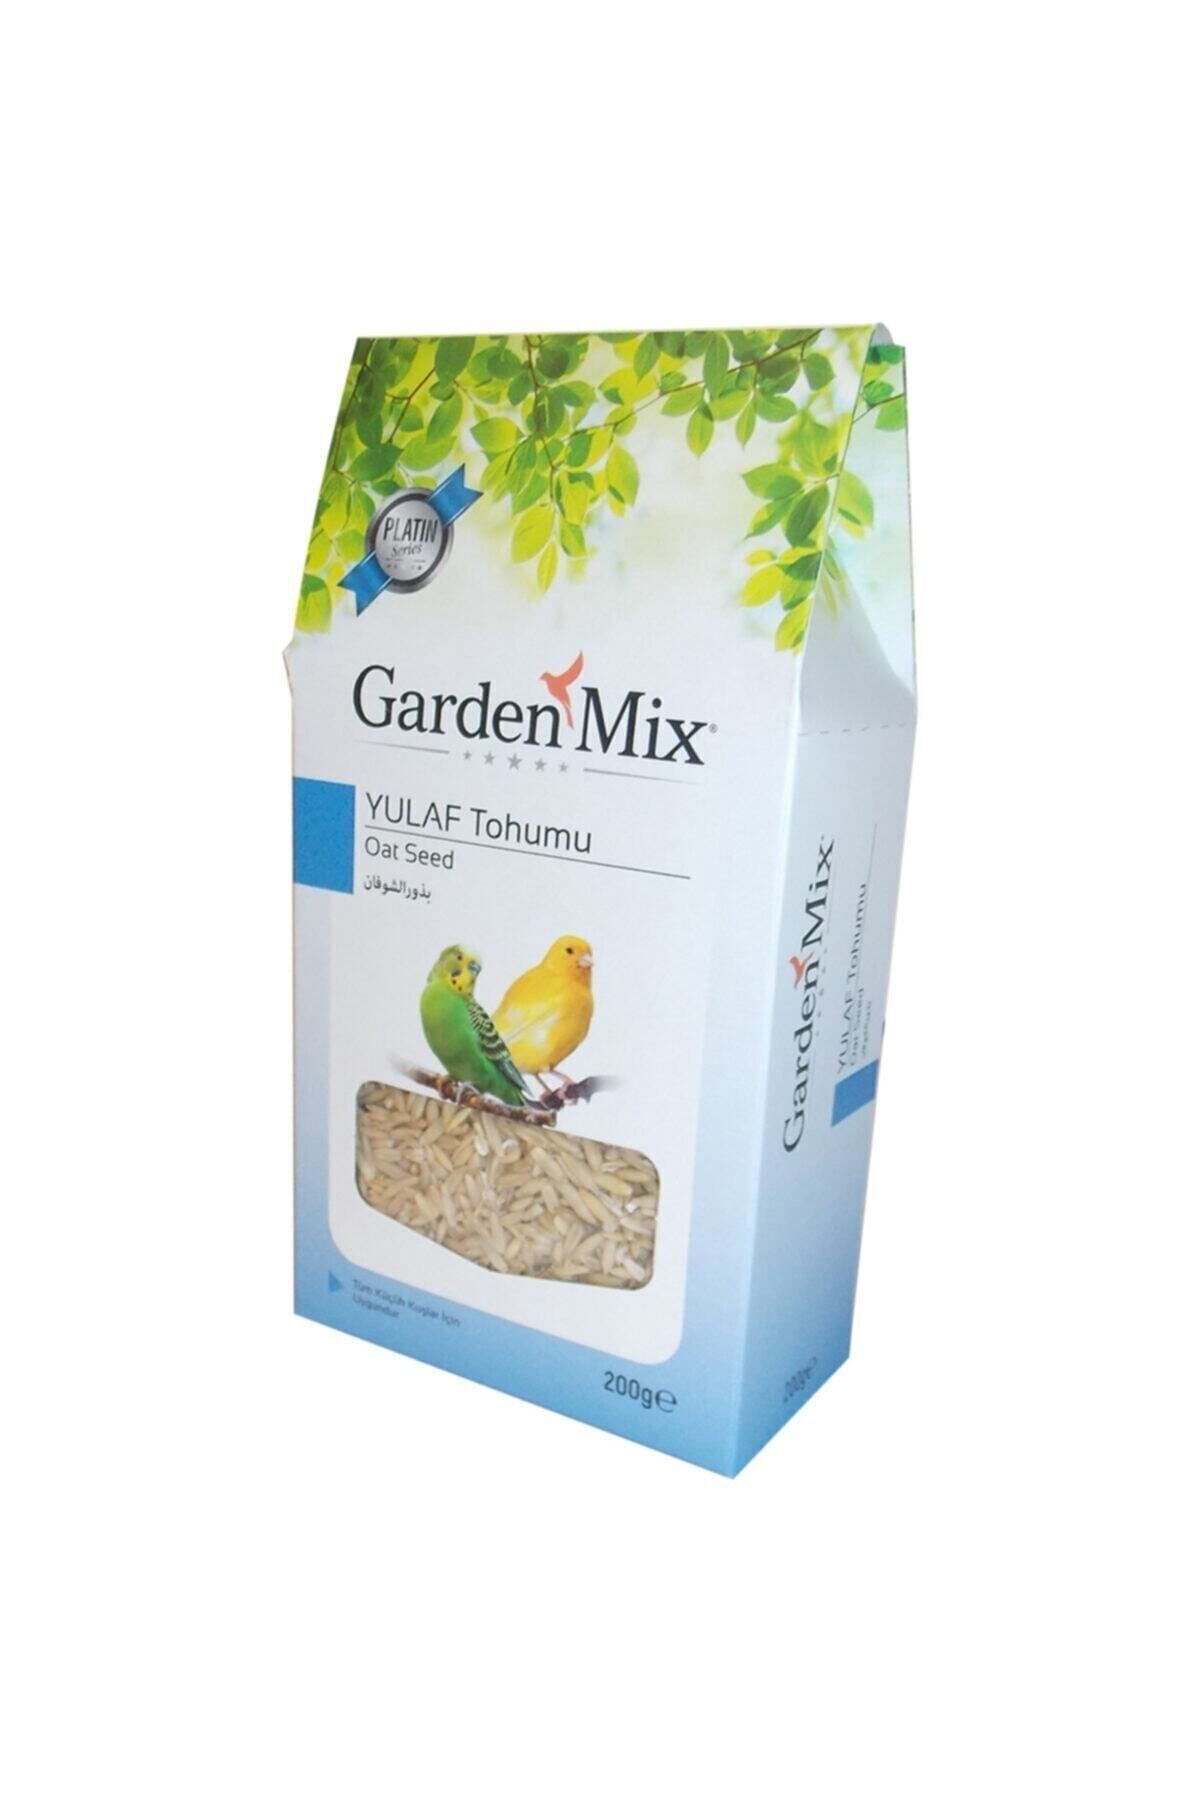 Gardenmix Gardenmıx Platin Yulaf Tohumu 200 gr